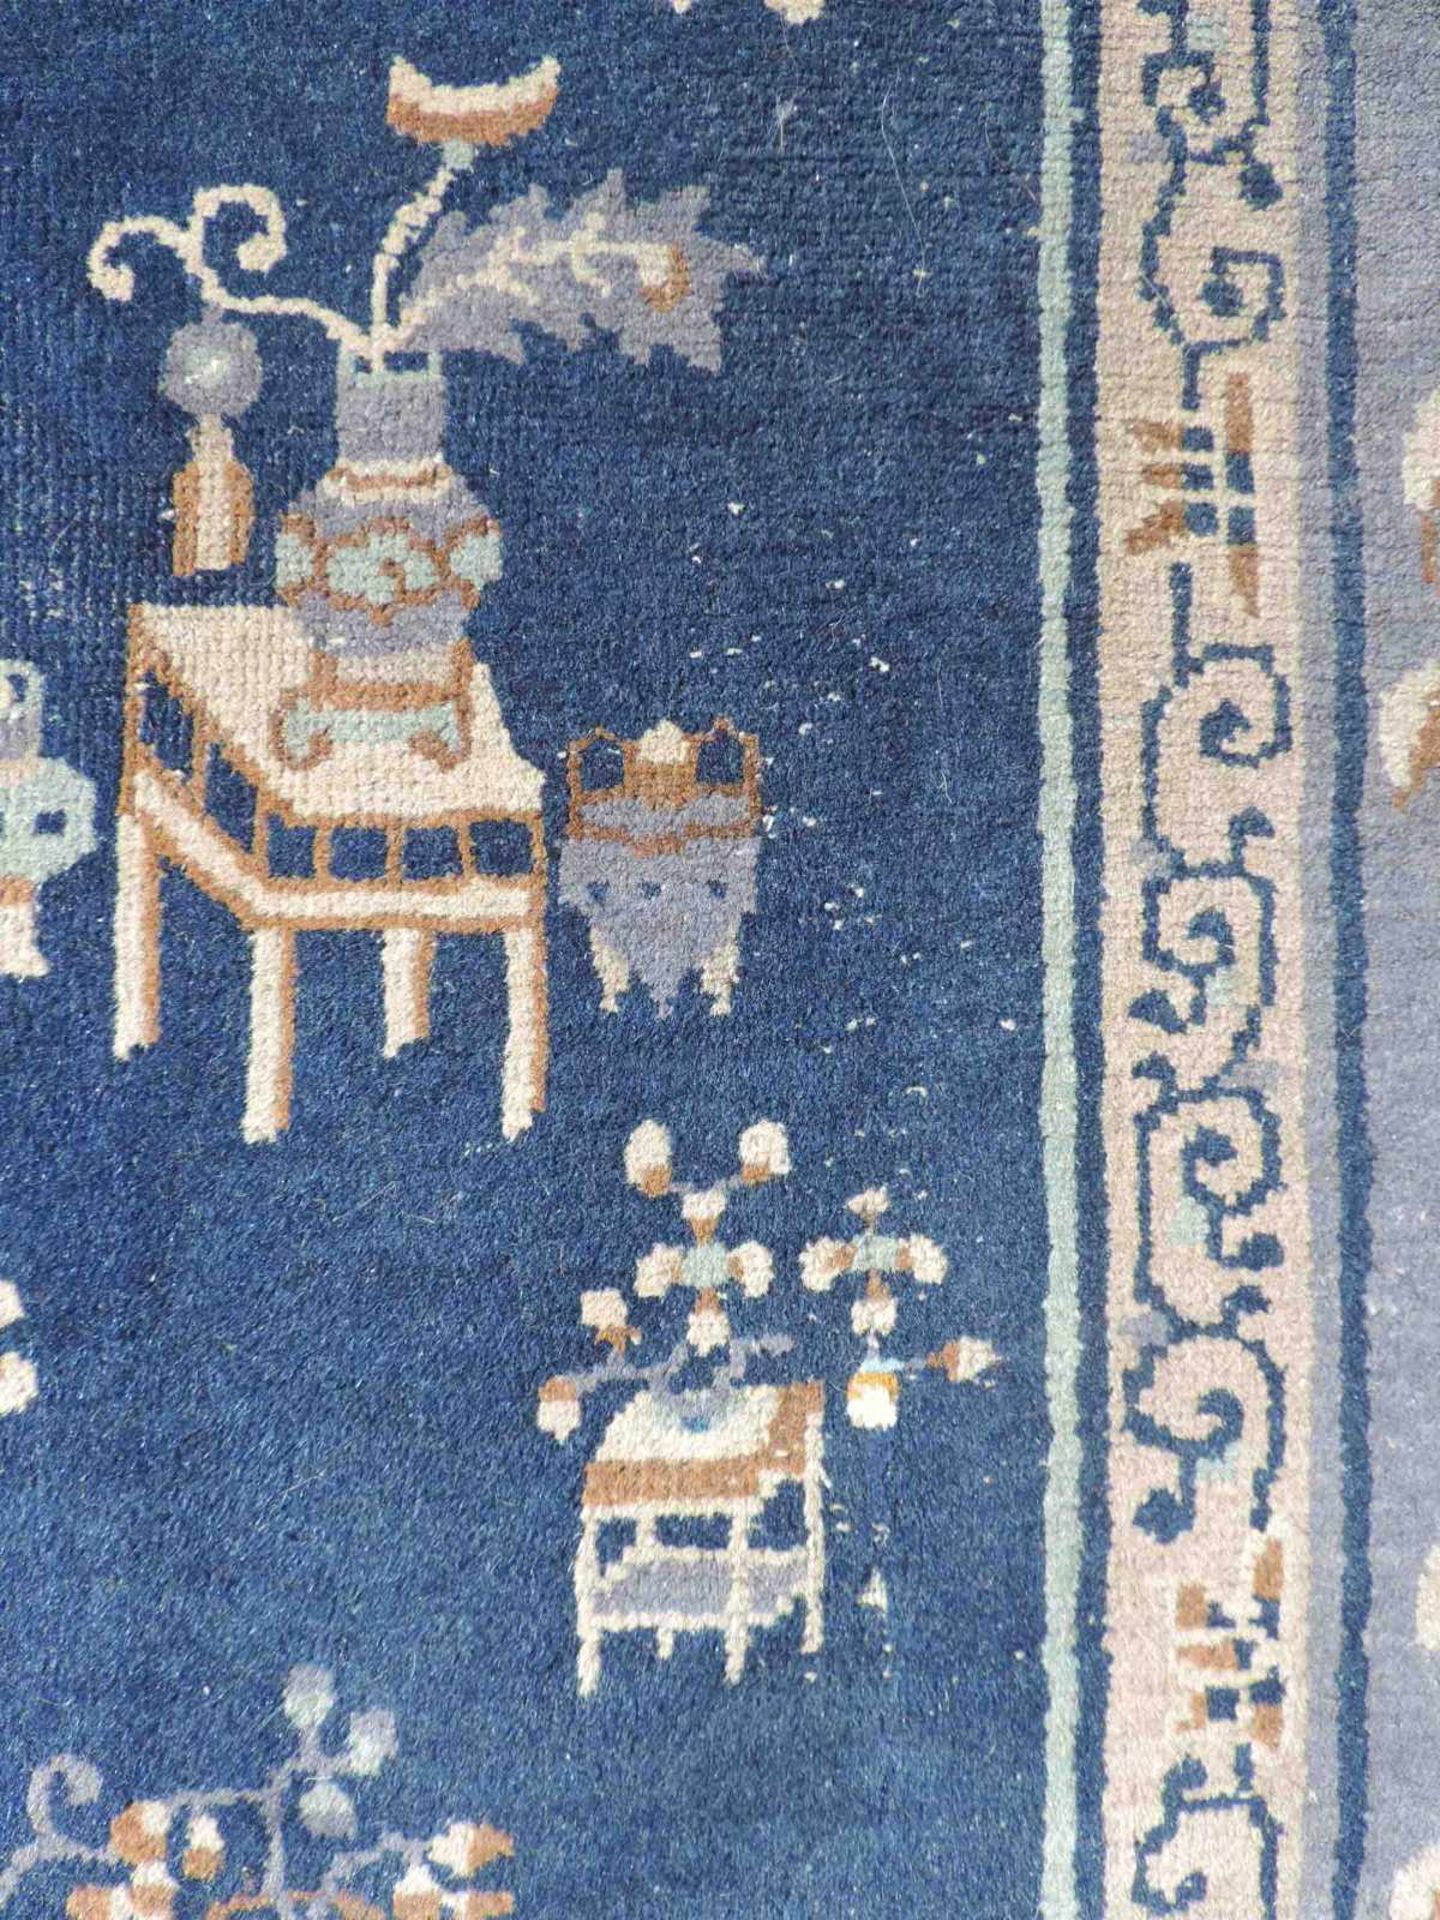 Pau Tou Teppich China, antik, Ende 19. Jahrhundert. 180 cm x 93 cm. Handgeknüpft. Wolle auf - Bild 5 aus 7